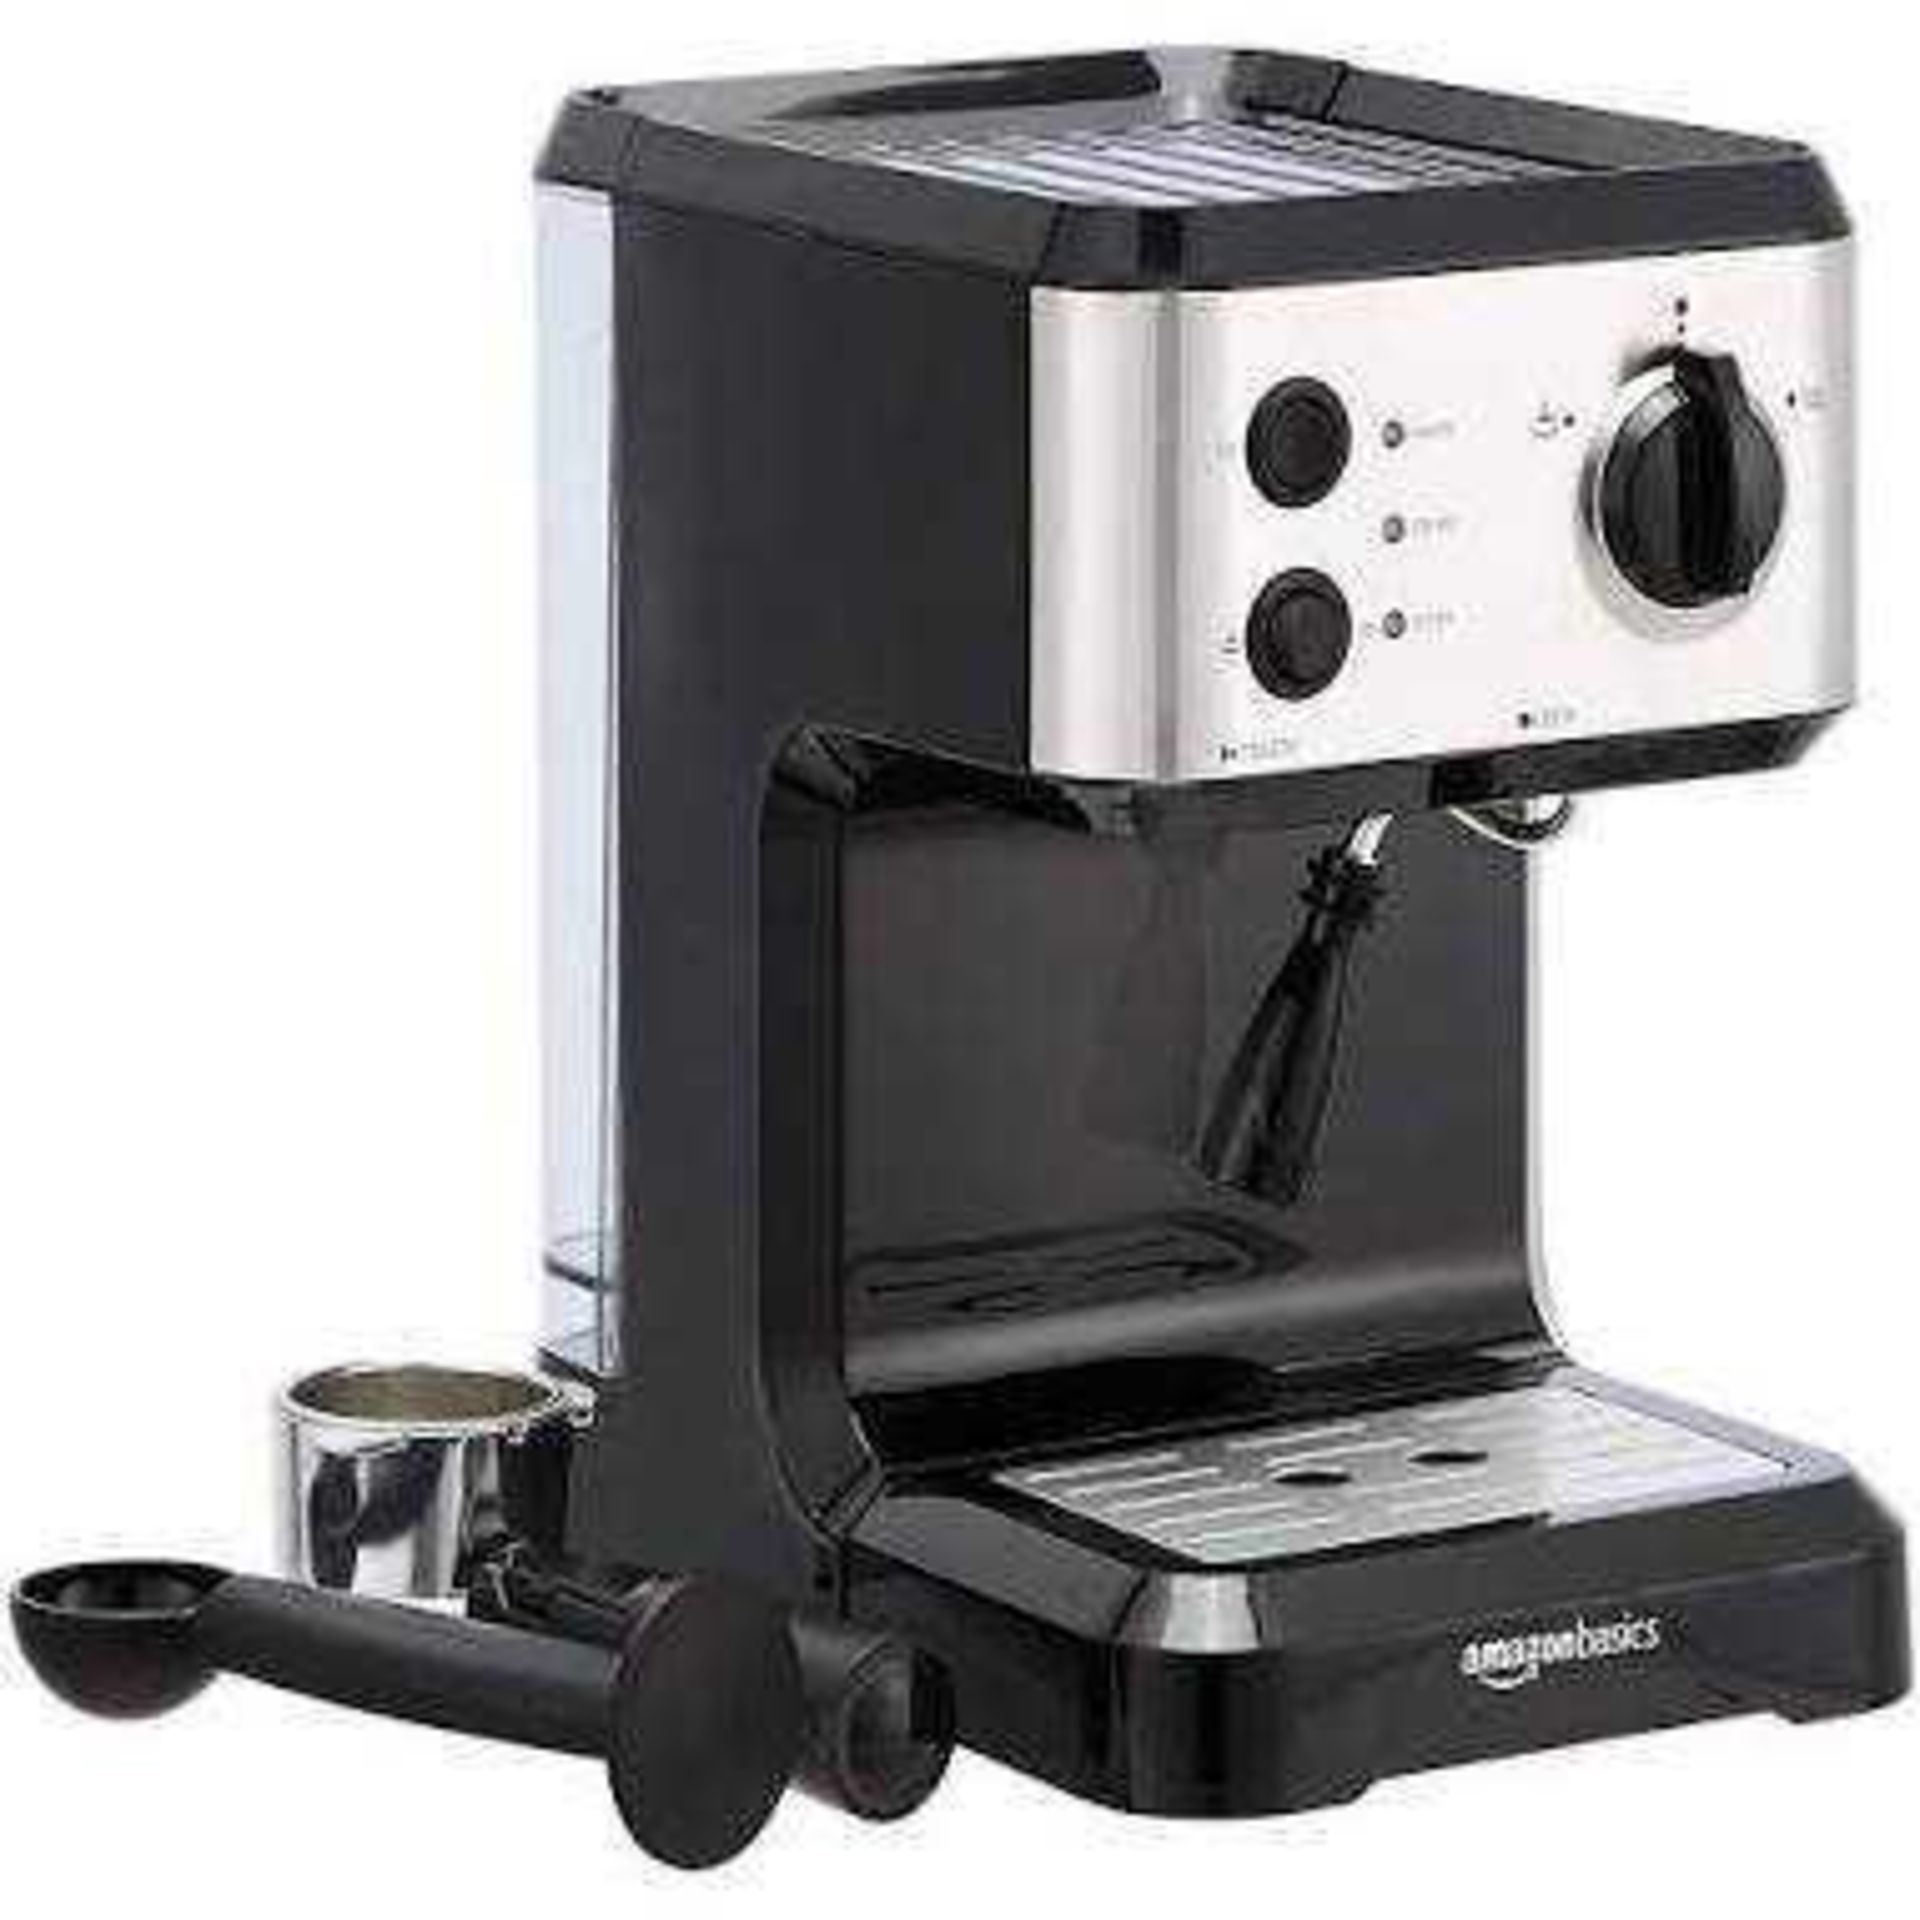 RRP £140 Lot To Contain 2X Boxed Amazon Basics Espresso Coffee Machine - Image 2 of 4